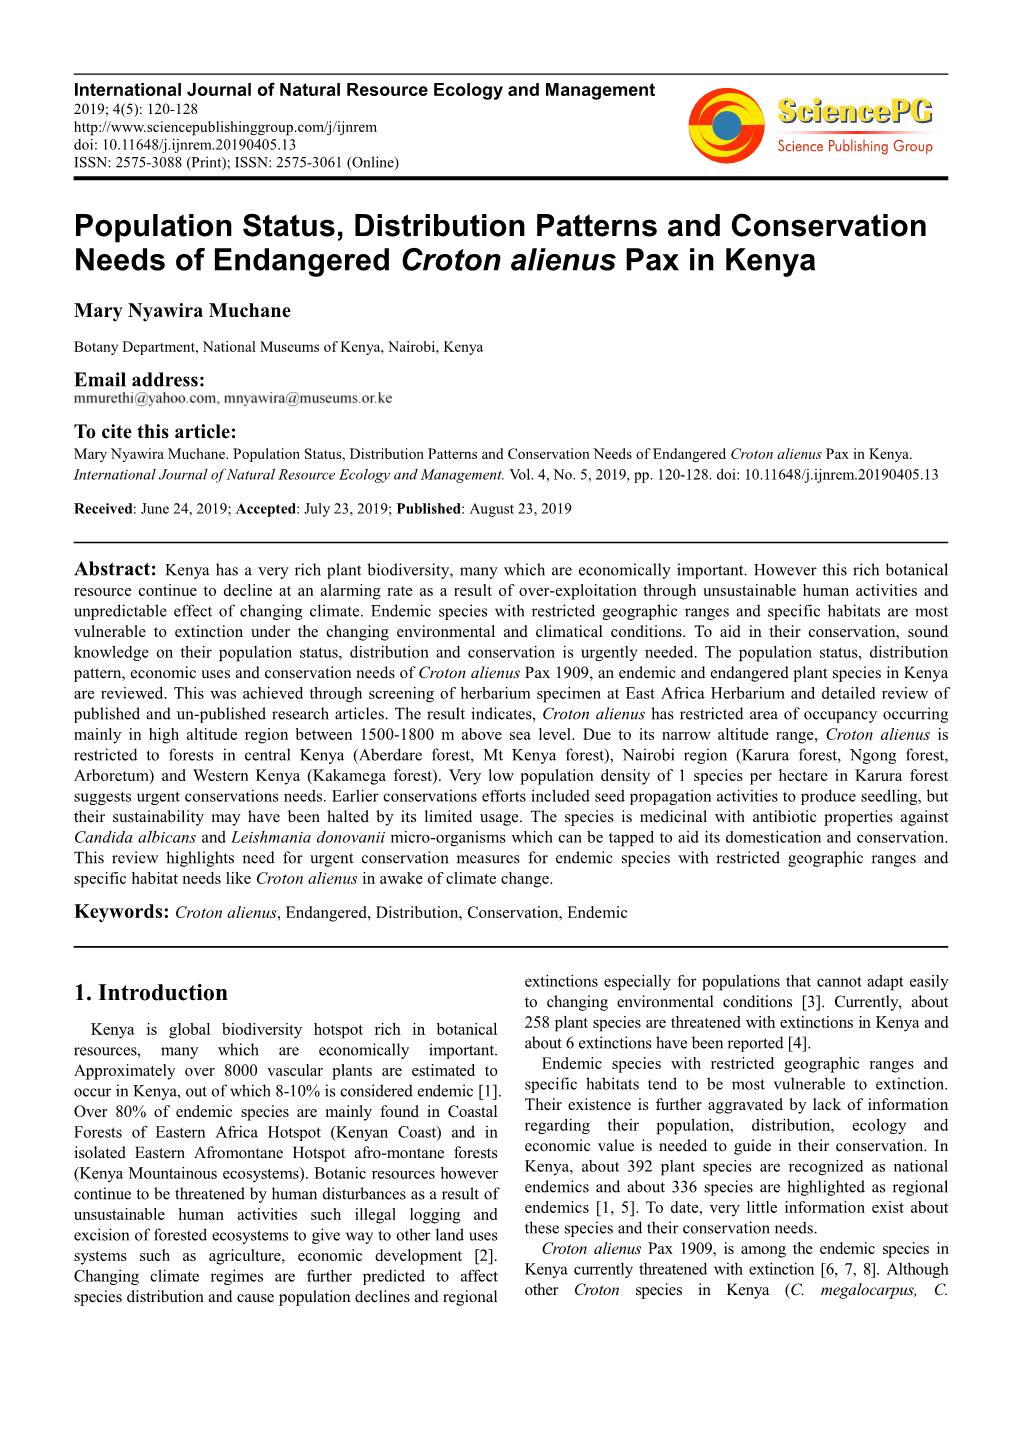 Population Status, Distribution Patterns and Conservation Needs of Endangered Croton Alienus Pax in Kenya